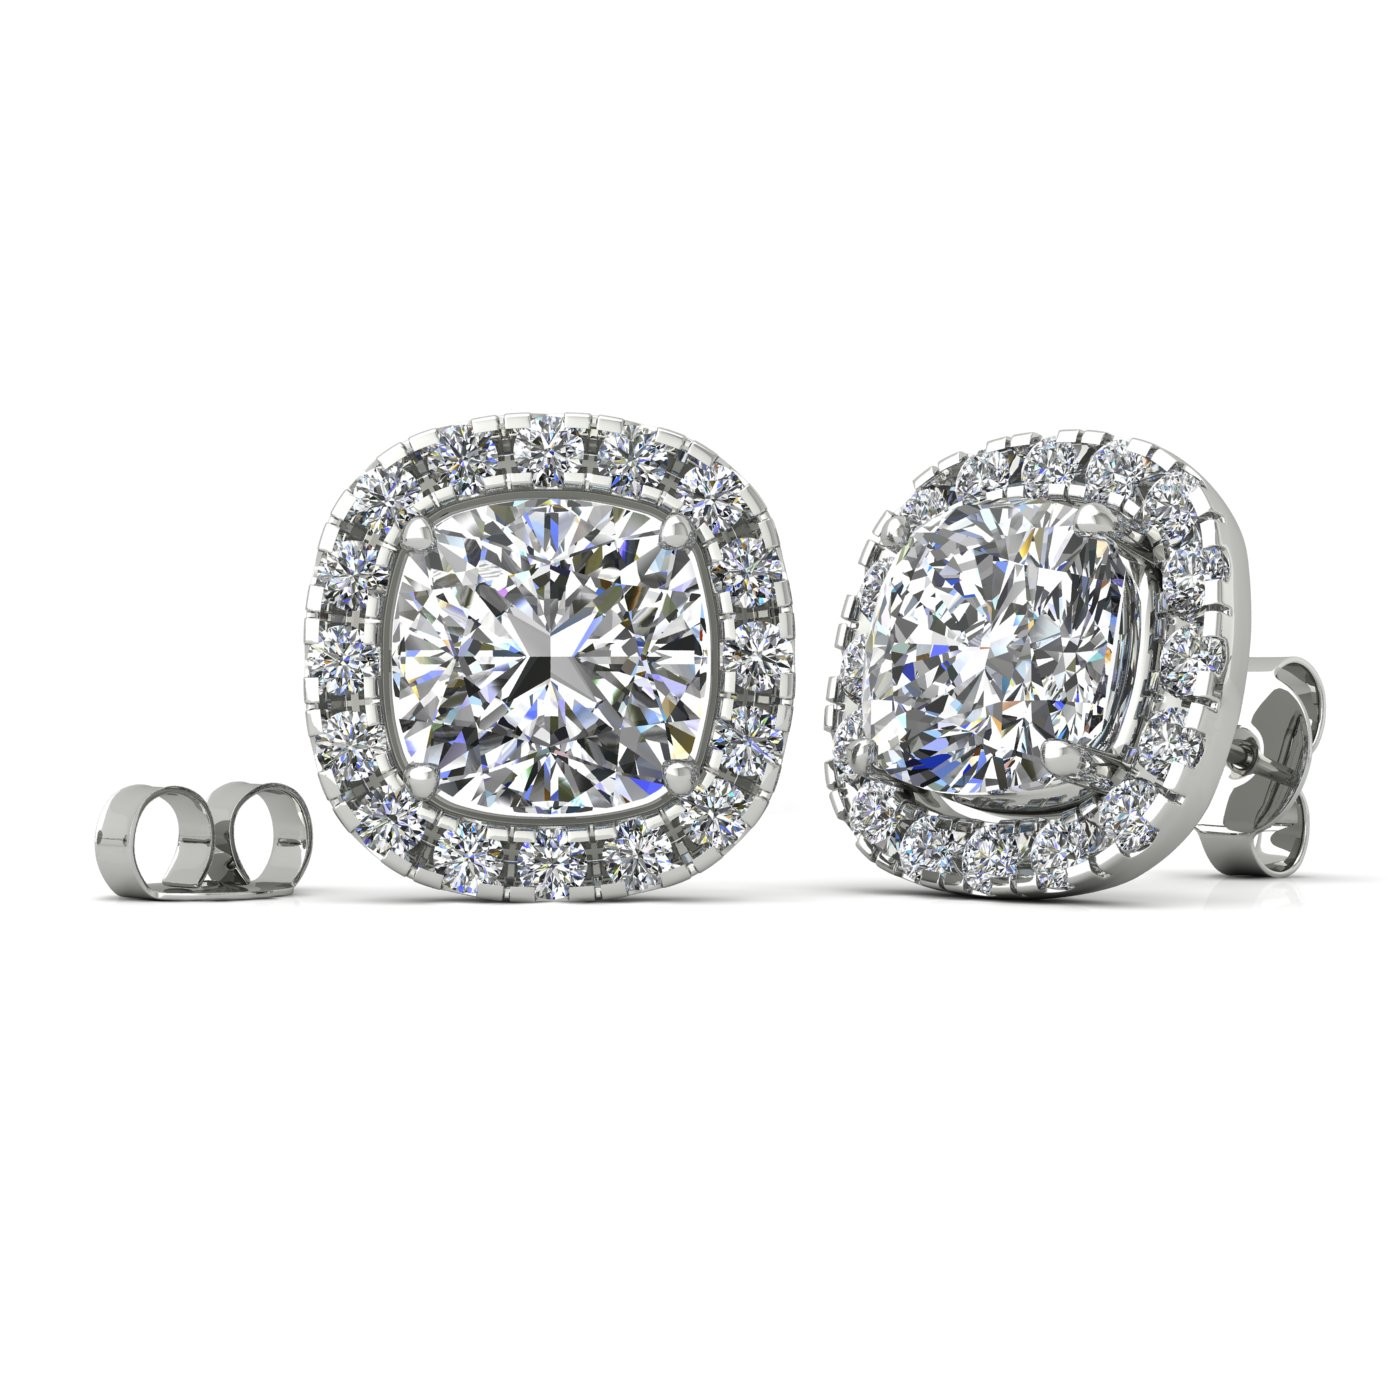 18k white gold  2,0 ct each (4,0 tcw) 4 prongs cushion shape diamond earrings with diamond pavÉ set halo